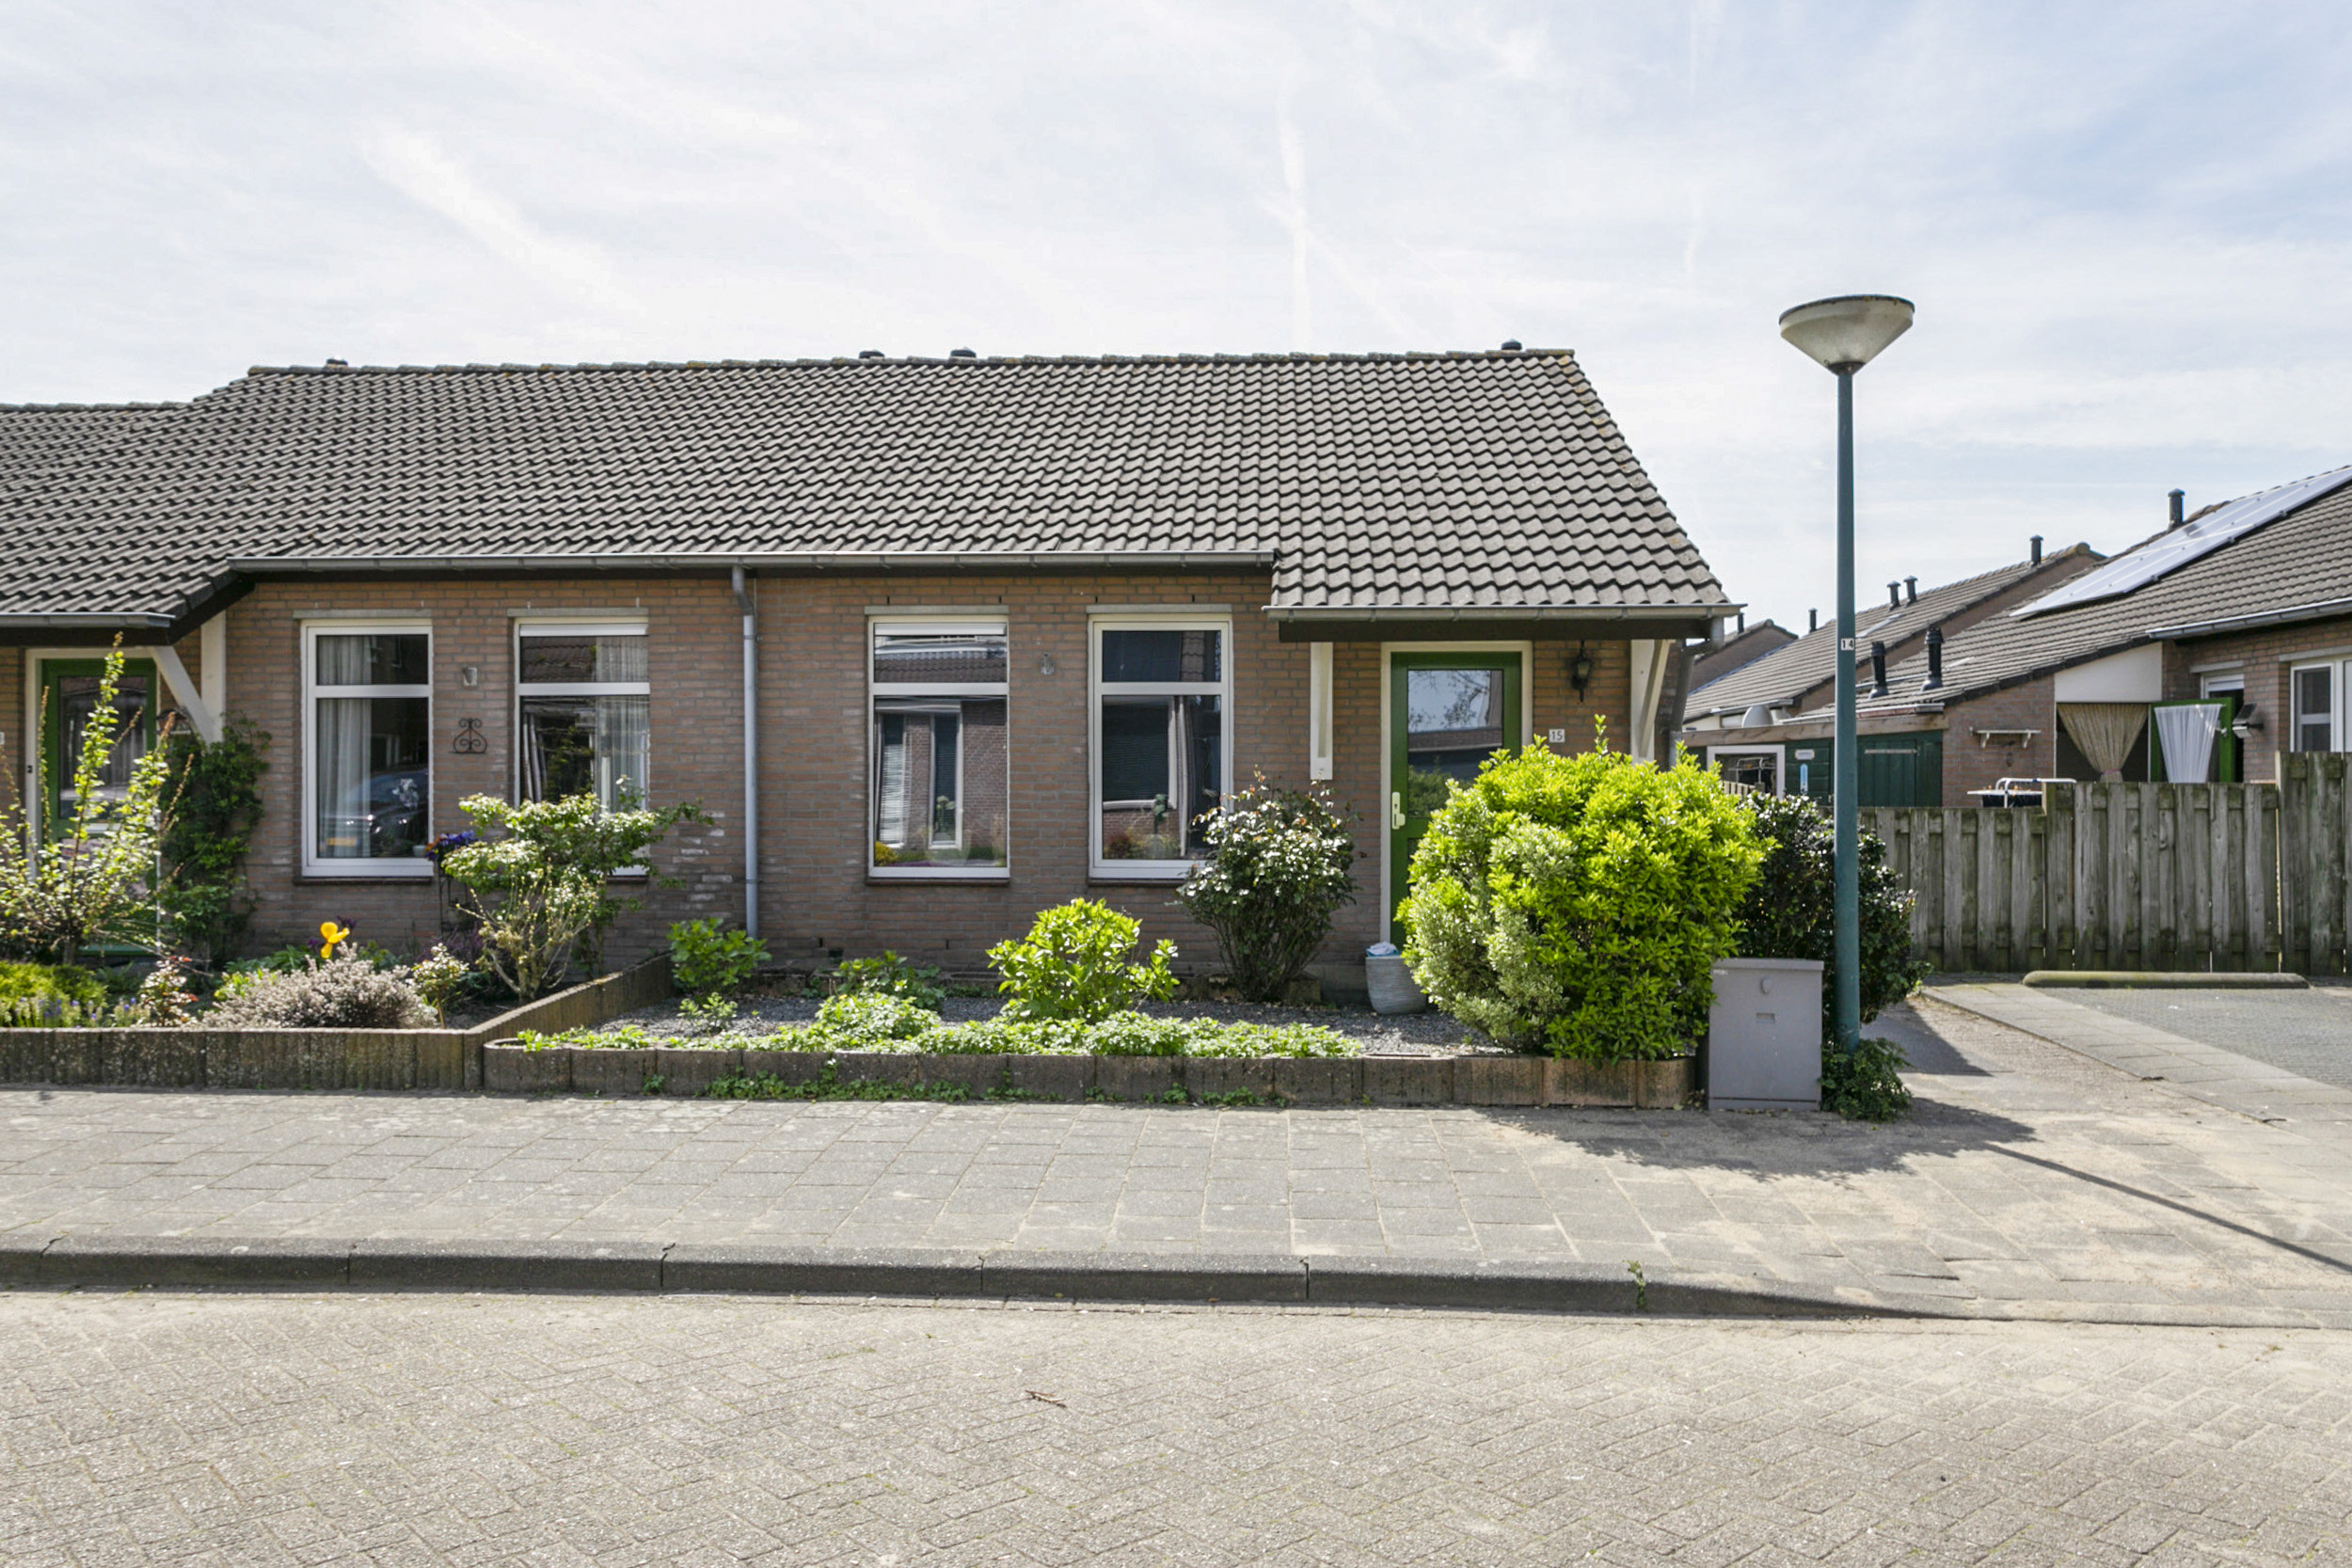 't Hooft 15, 4791 KB Klundert, Nederland